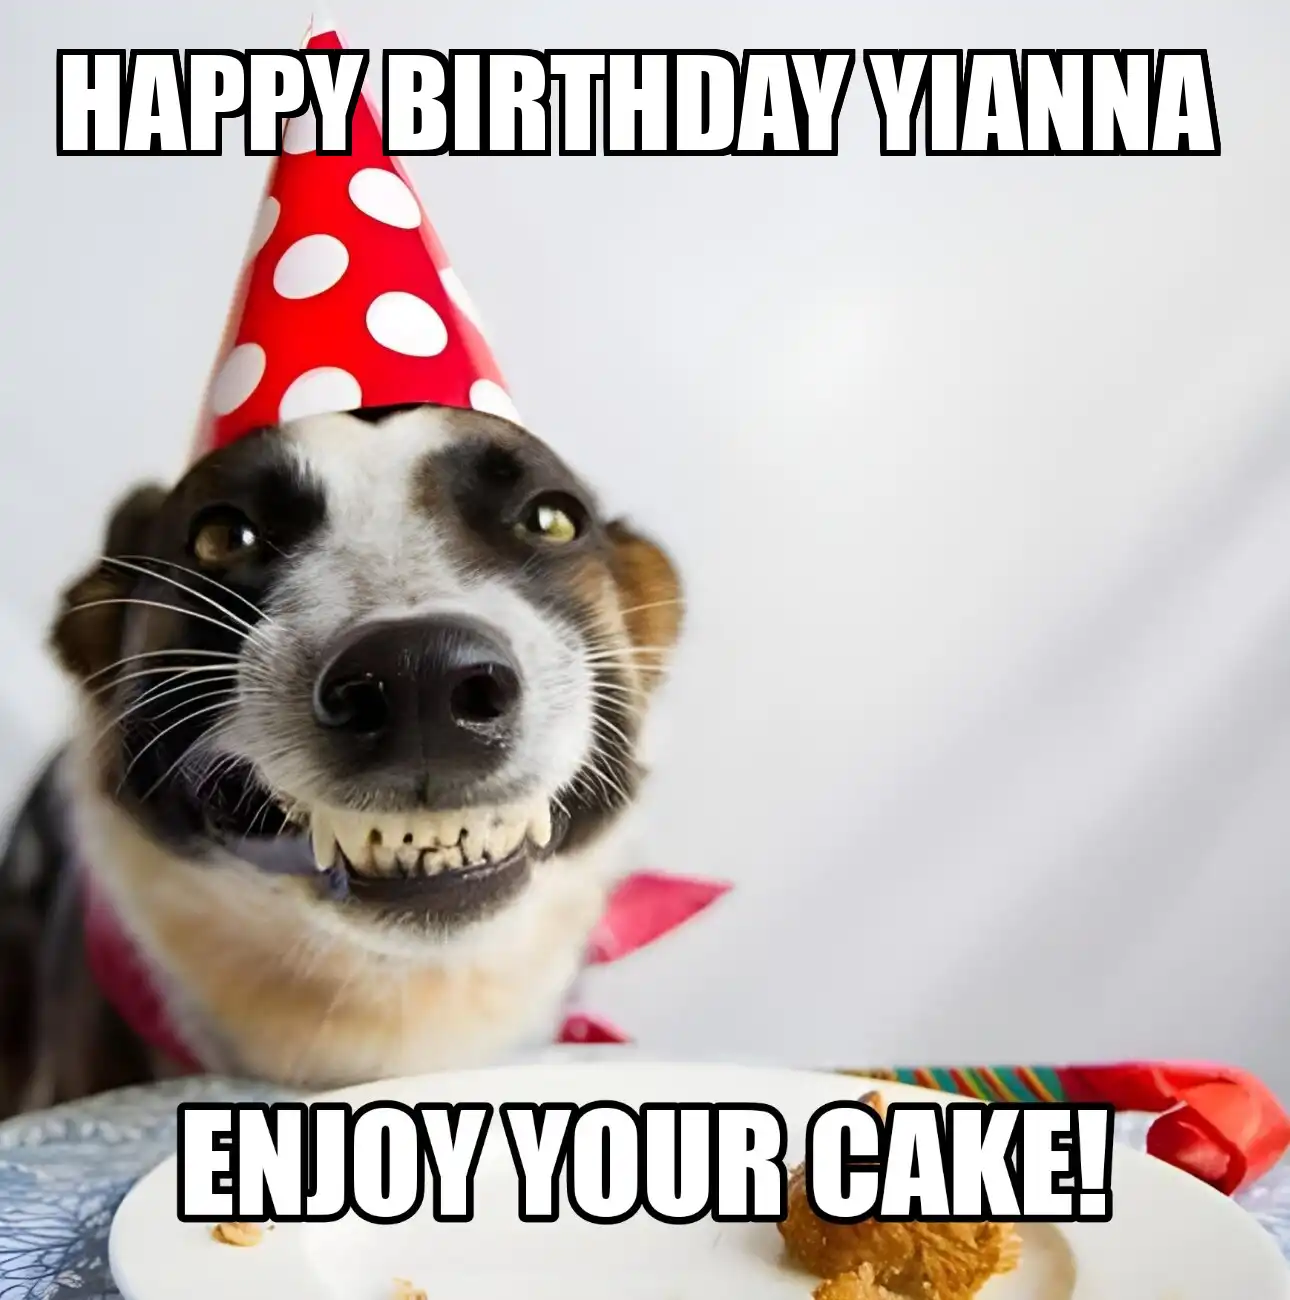 Happy Birthday Yianna Enjoy Your Cake Dog Meme